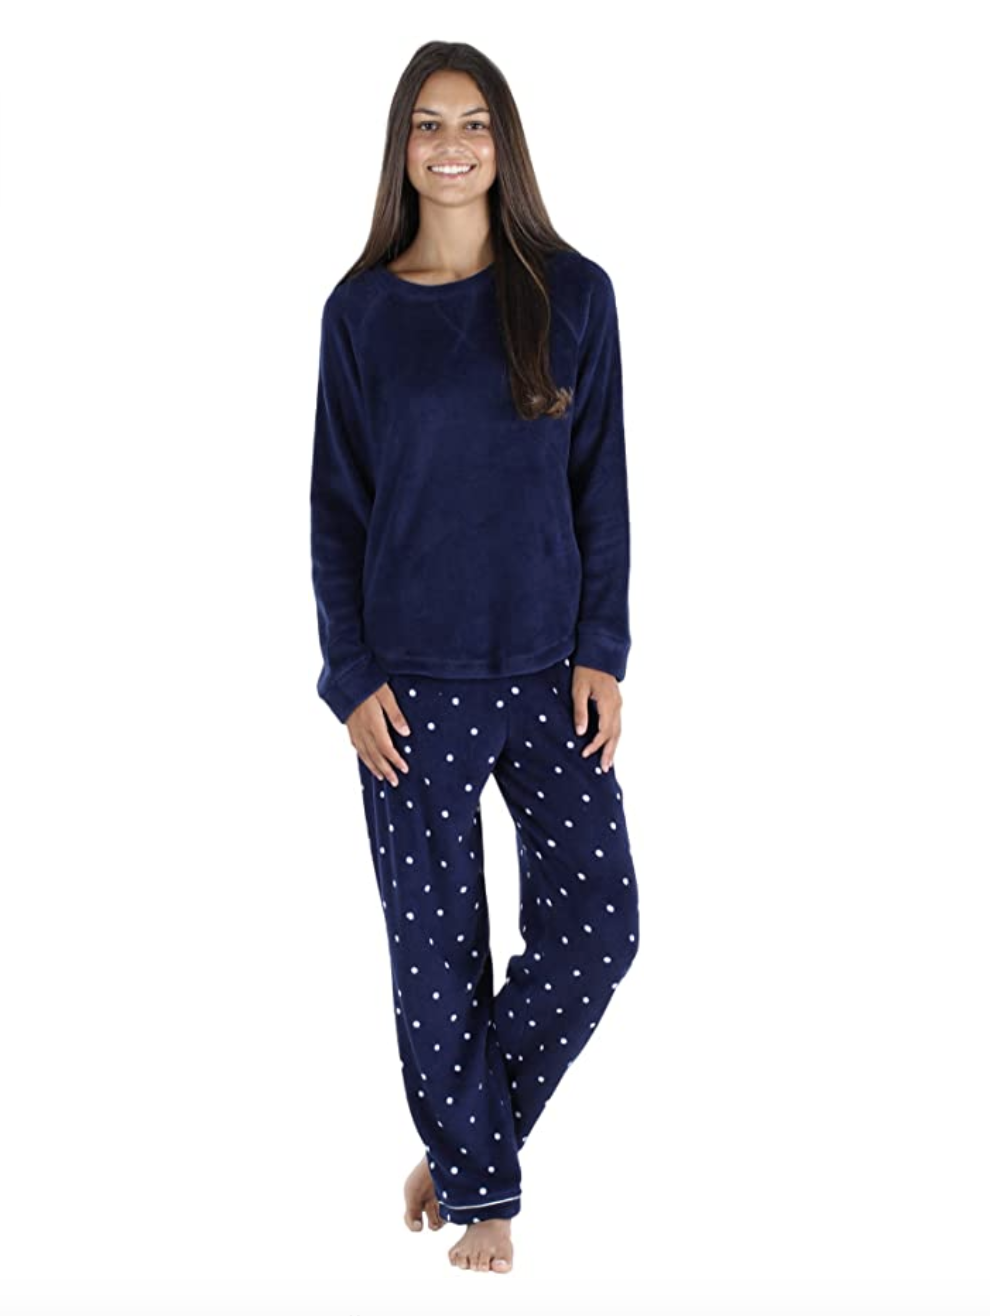 Femofit Plush Fleece Pajamas Set for Women Long Sleeve Sleepwear Ladies Loungewear PJ Set S-XL